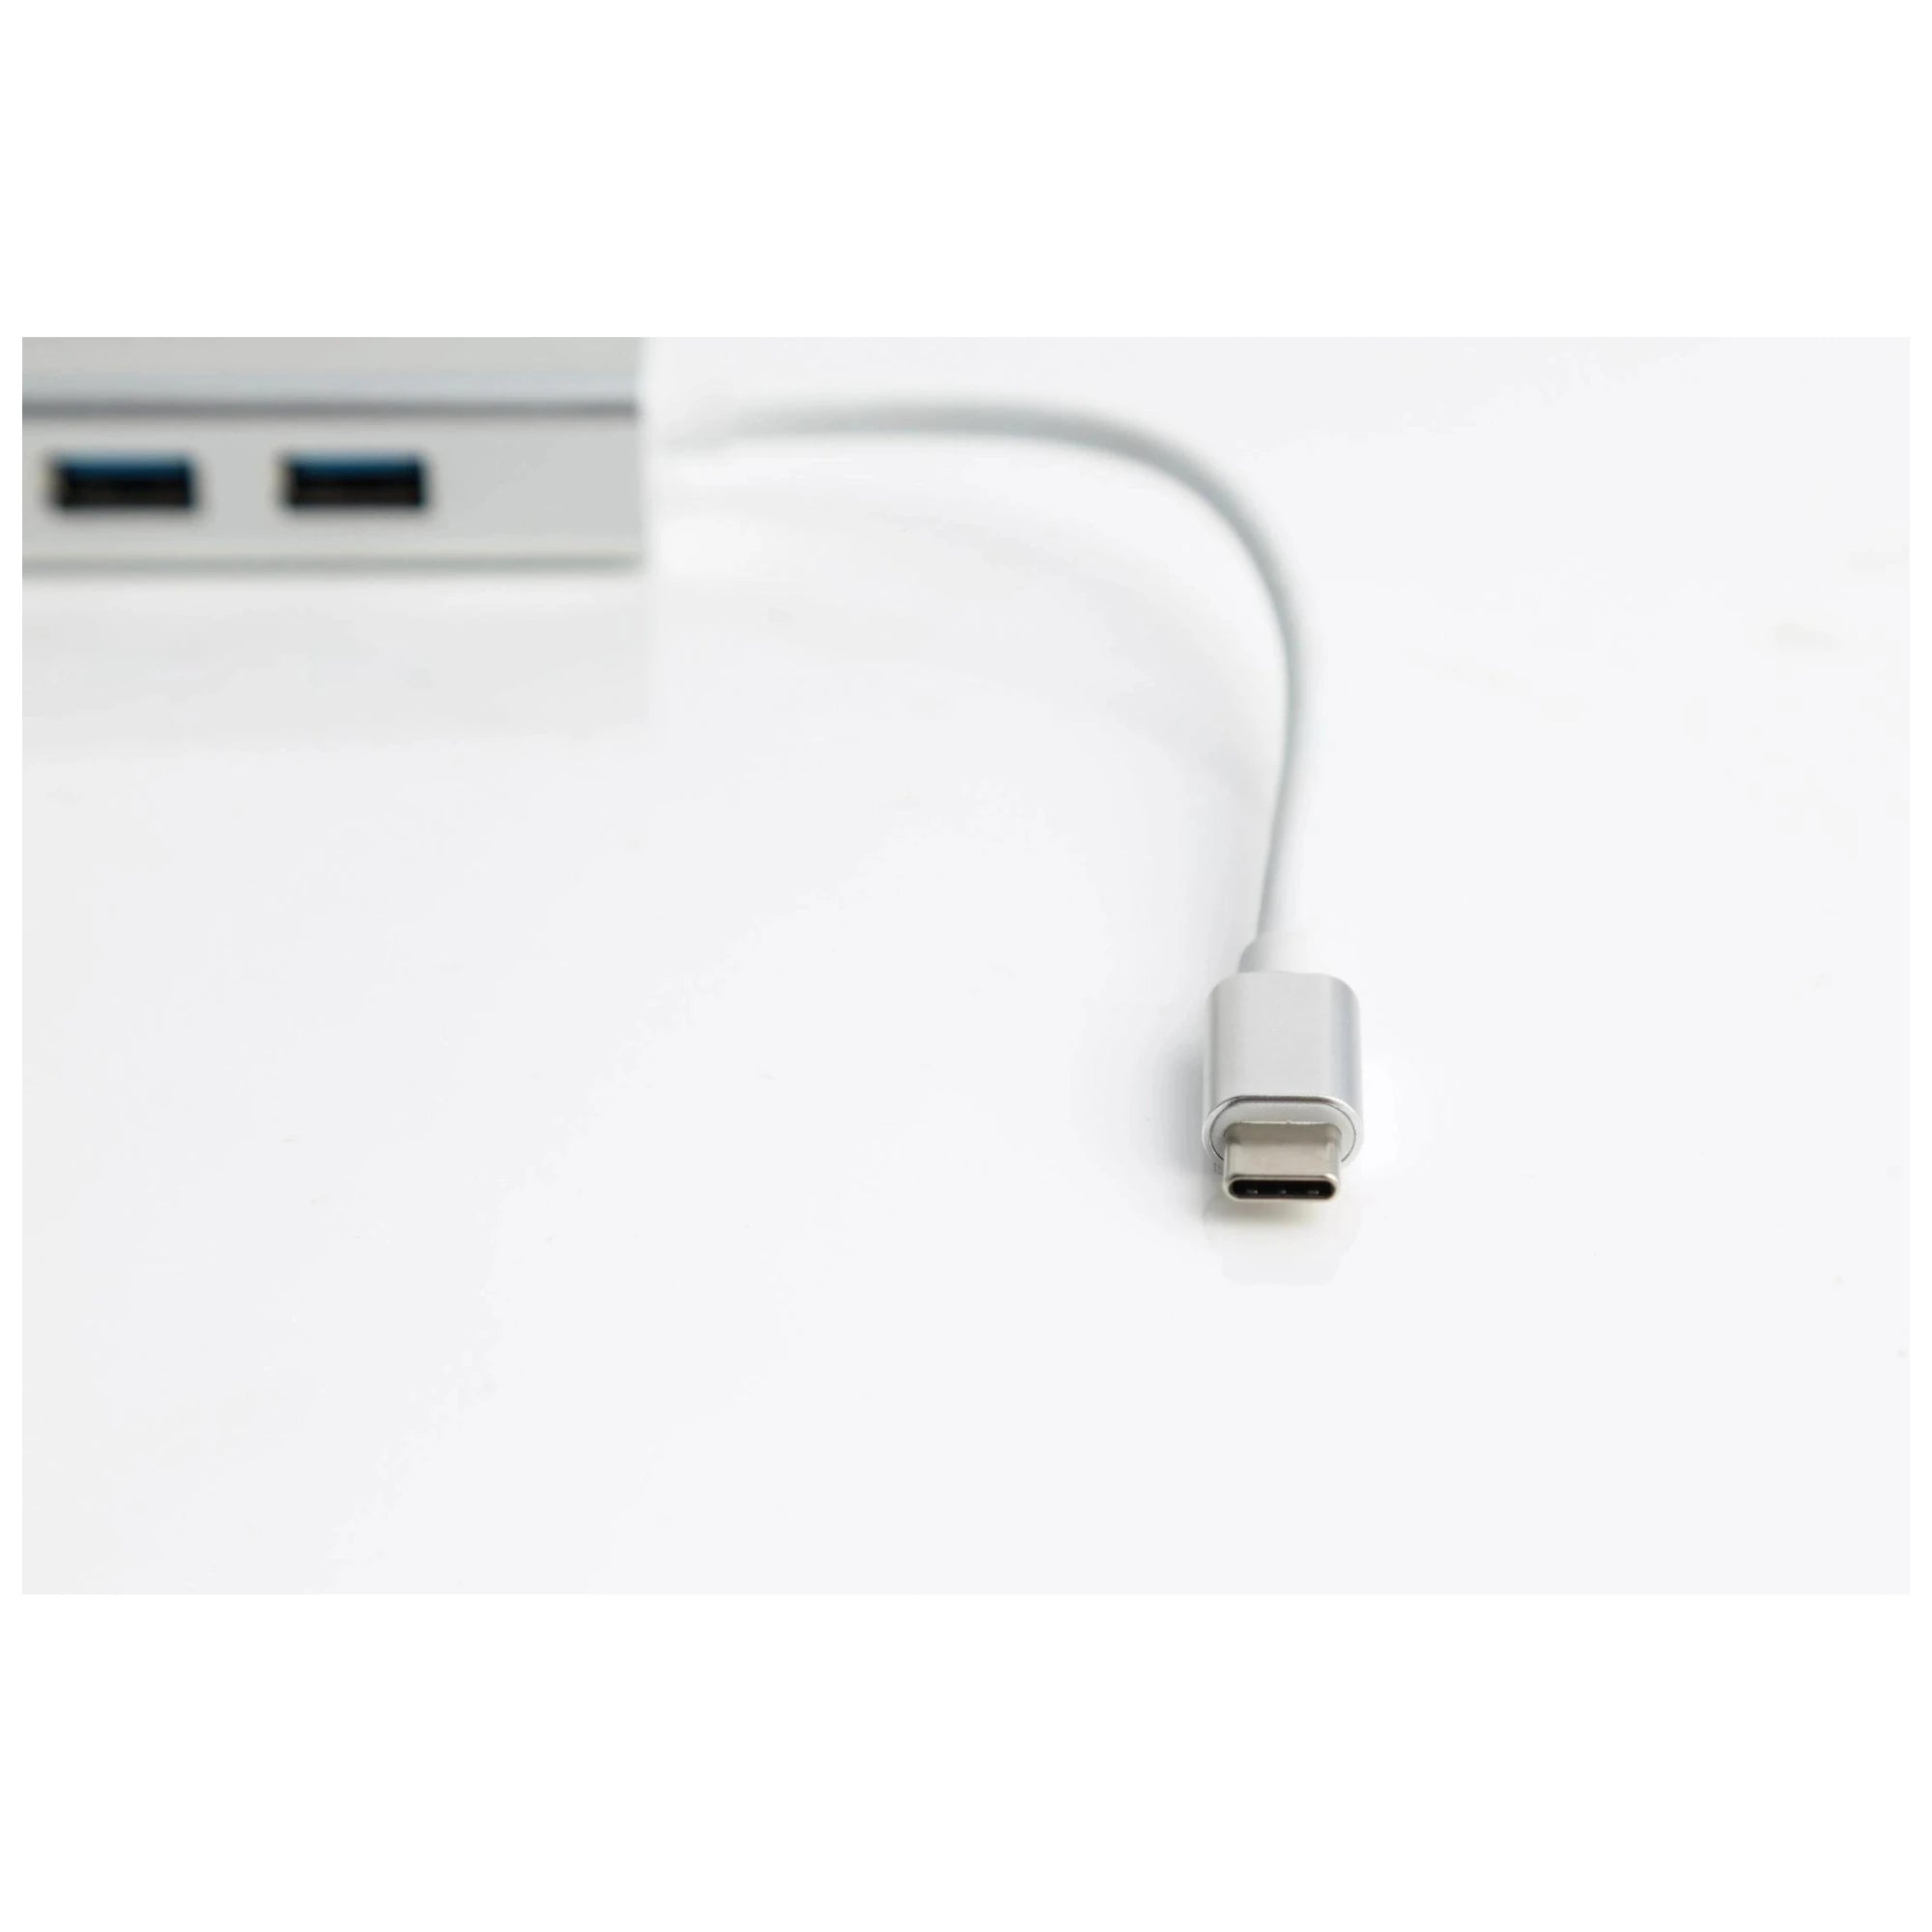 USB C - 3 Port USB 3.0 Hub with LAN 1M